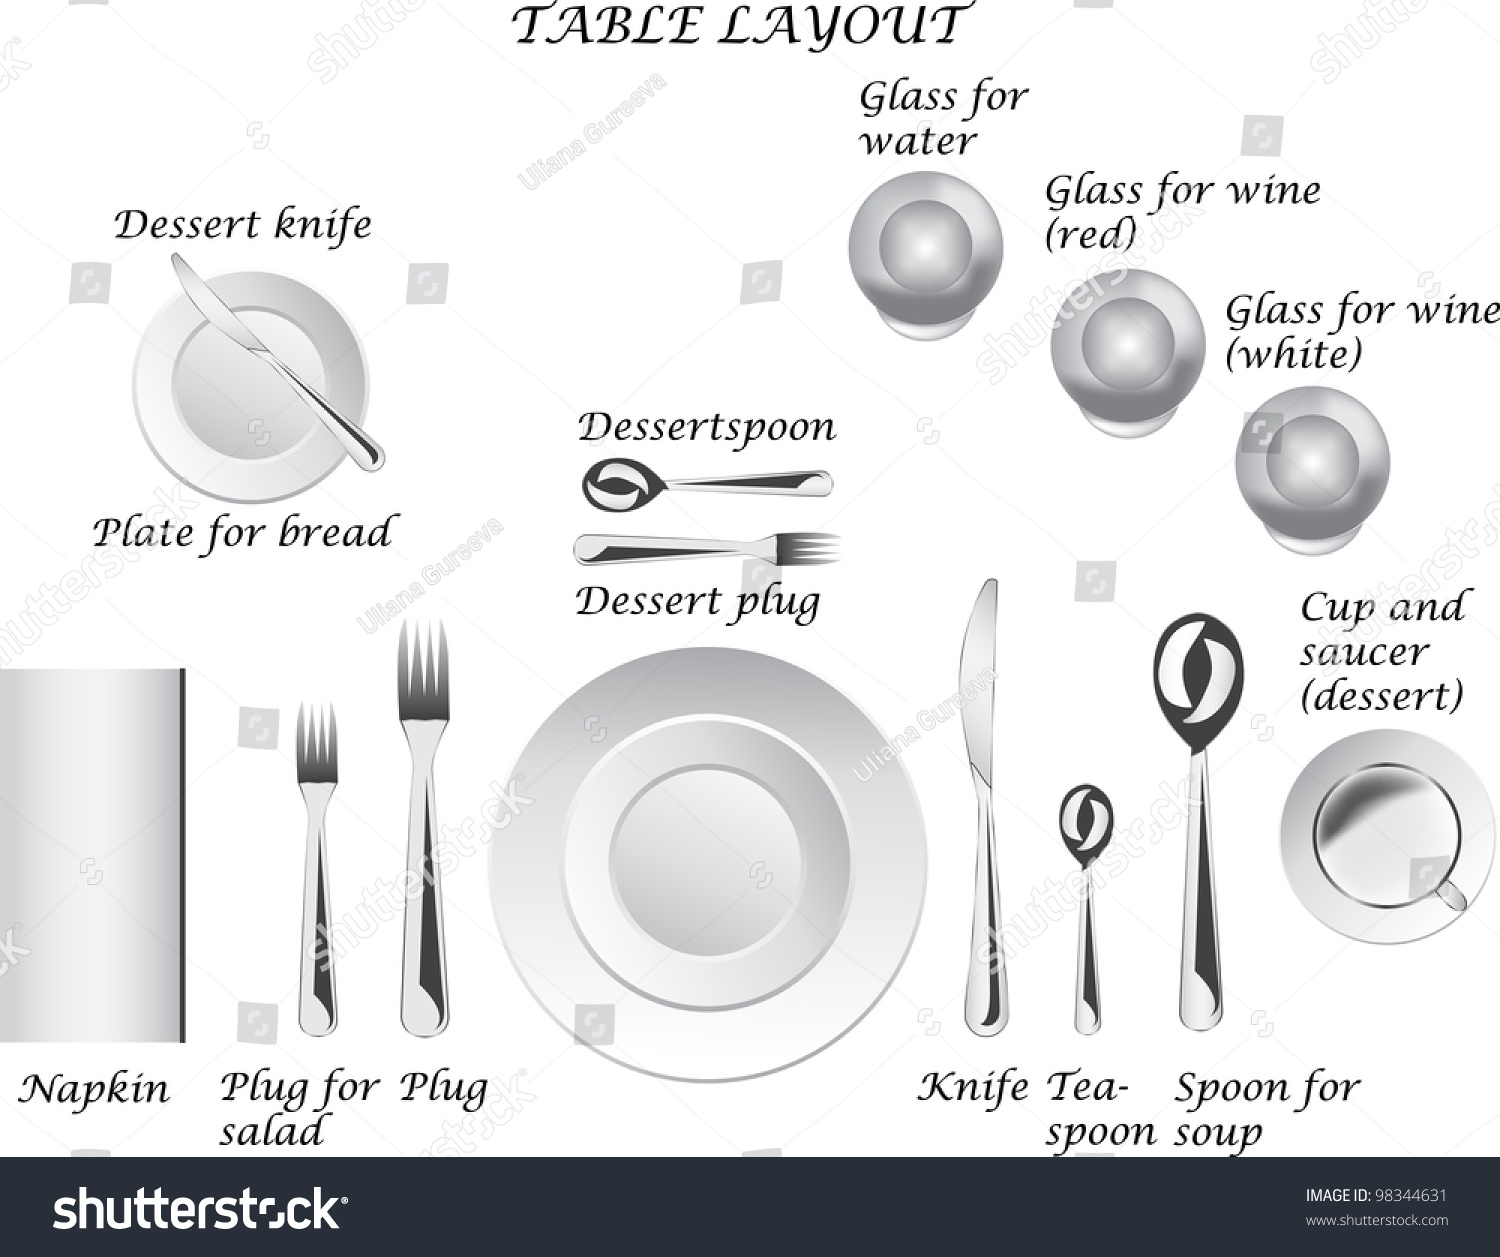 Table Layout Stock Illustration 98344631 - Shutterstock